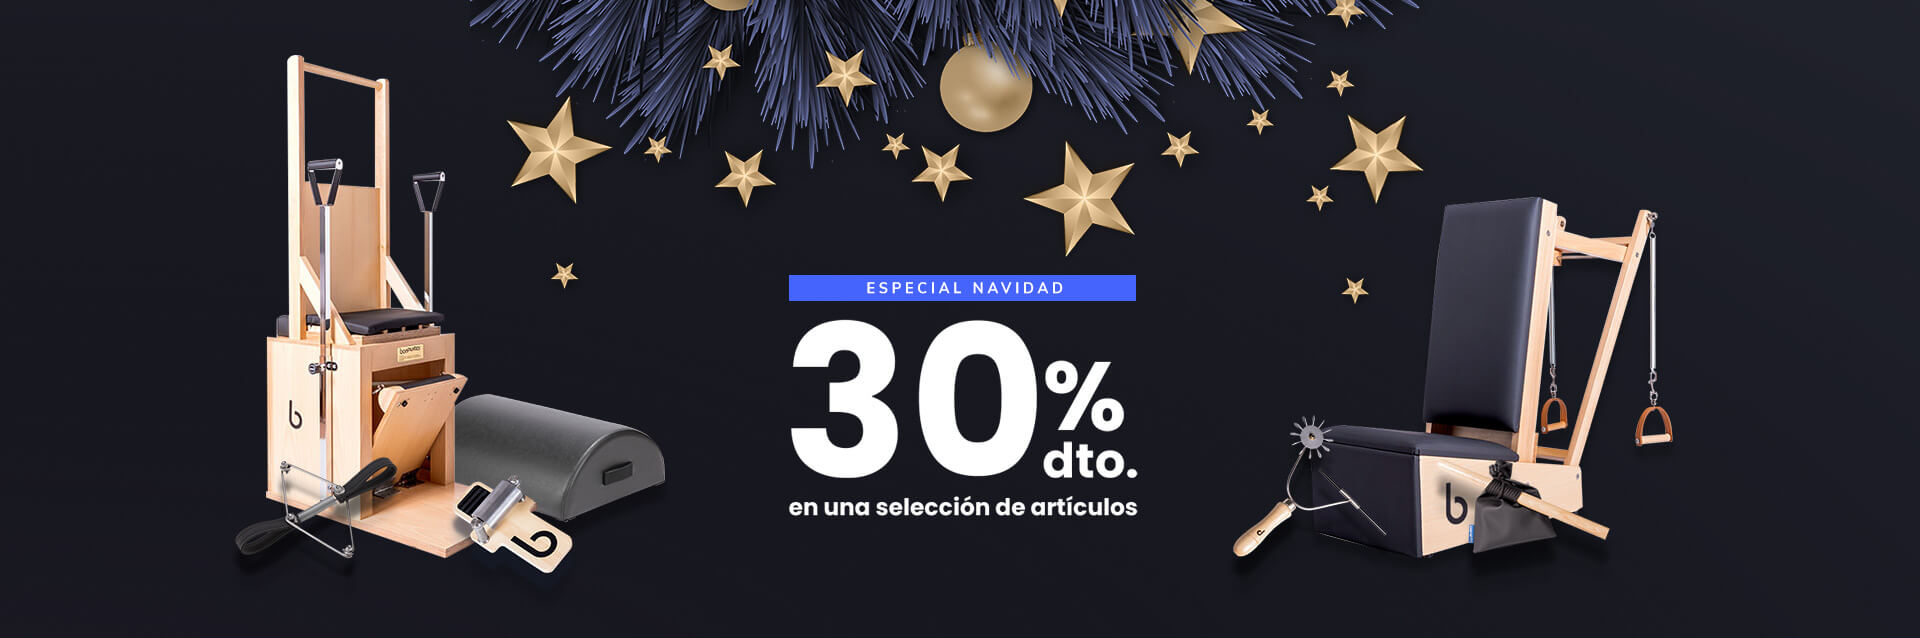 Banner superior Oferta Navidad Bonpilates - Navidad Oferta 30% dto